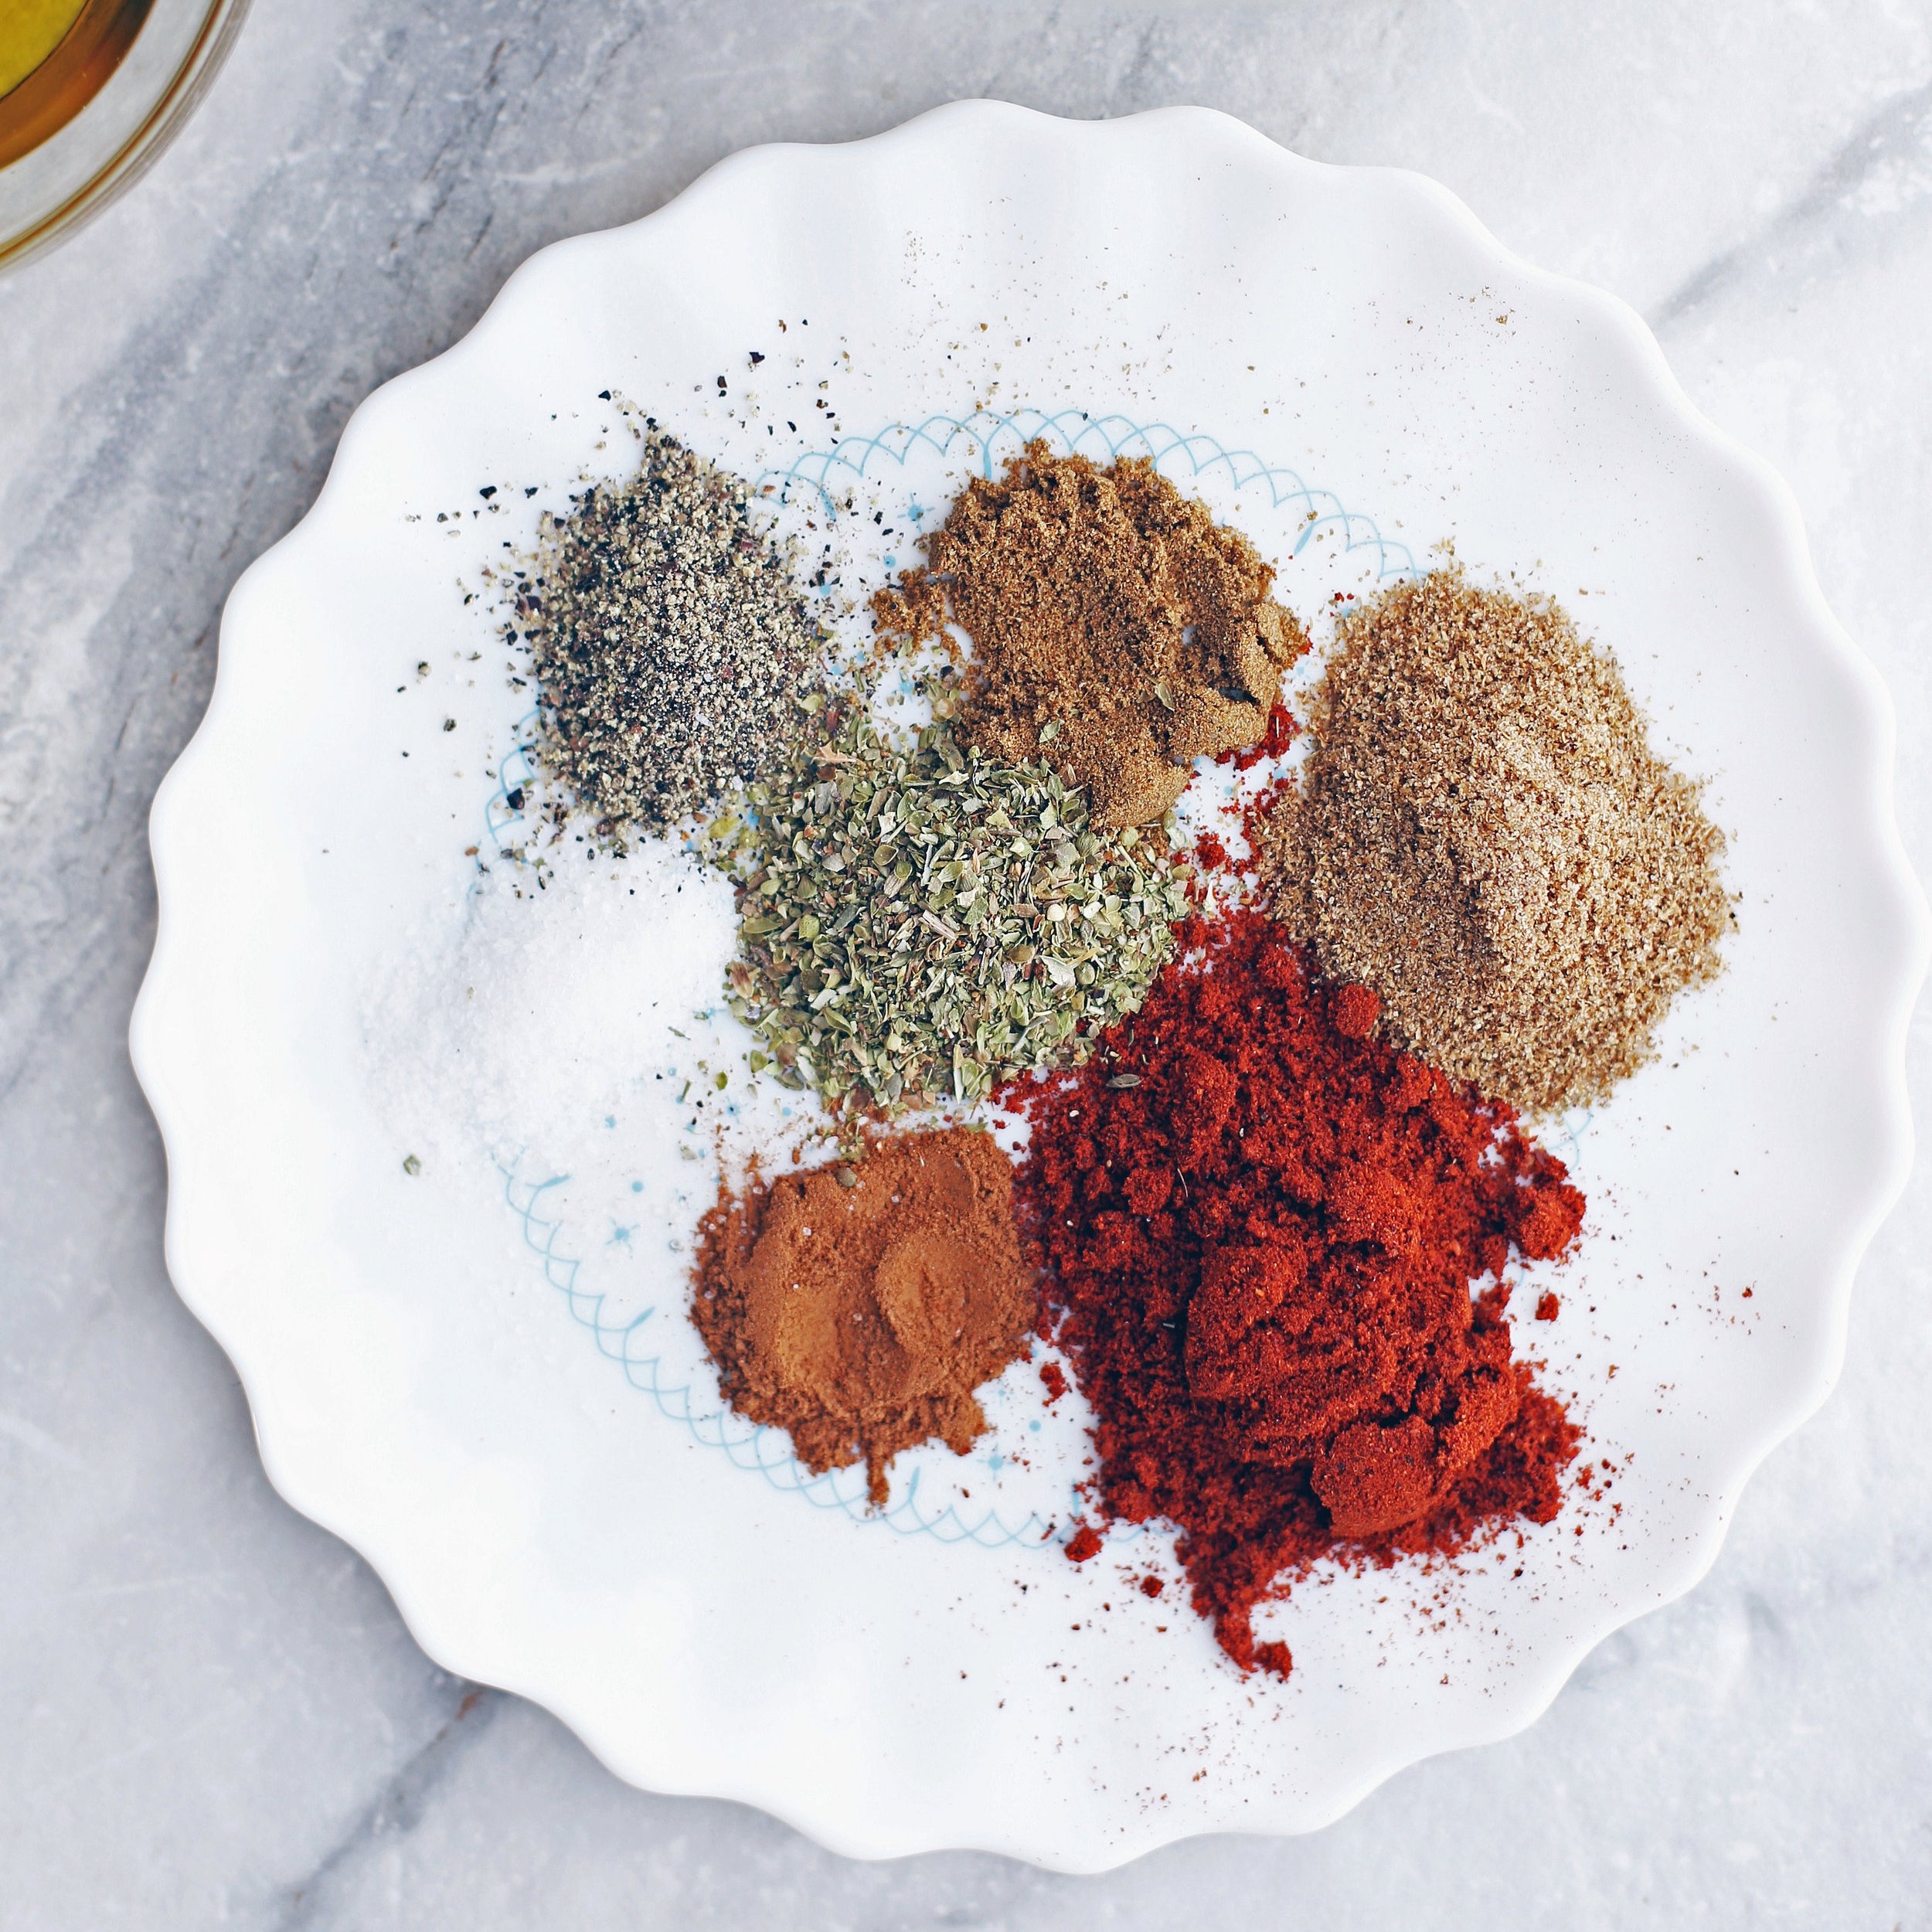 A plate of chili powder, ground coriander, cumin, cinnamon, oregano, black pepper, and salt.